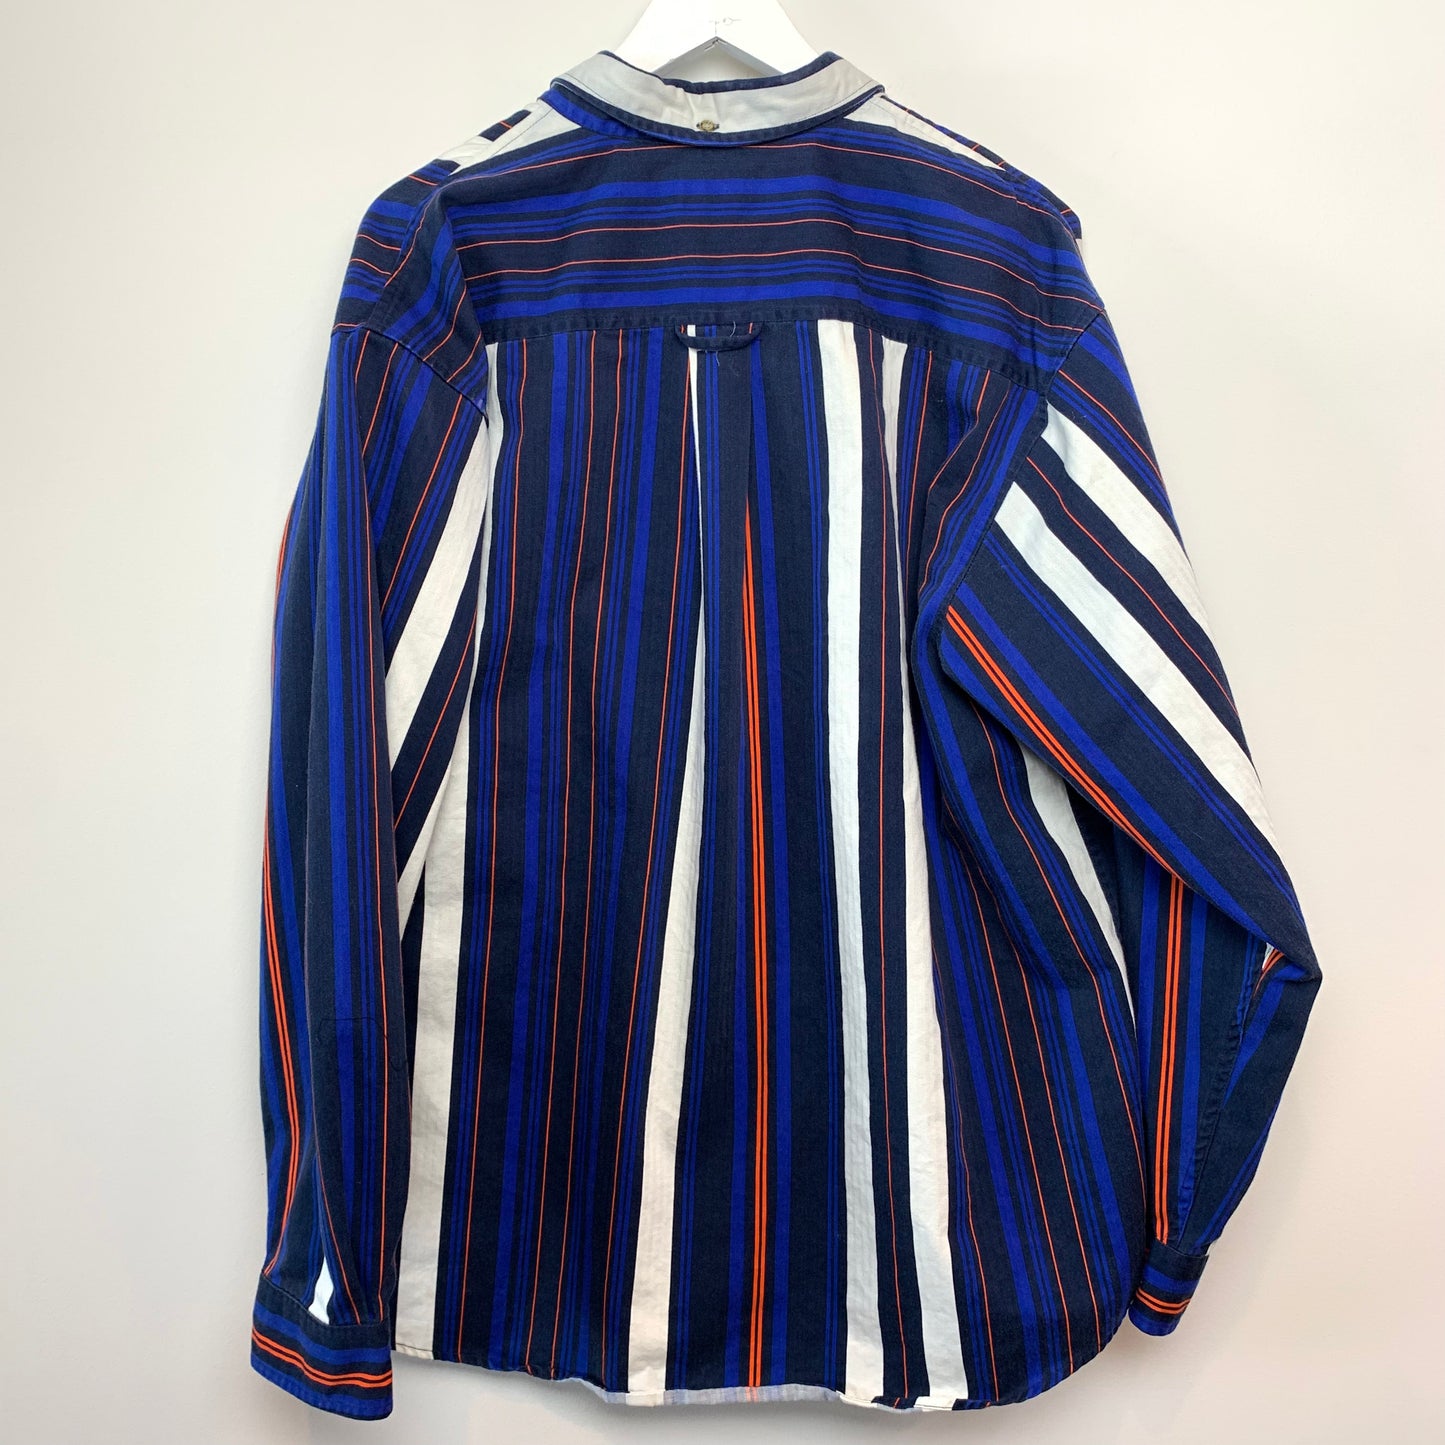 90s John Ashford Bold Striped Shirt Long Sleeve Button Down XL Cotton